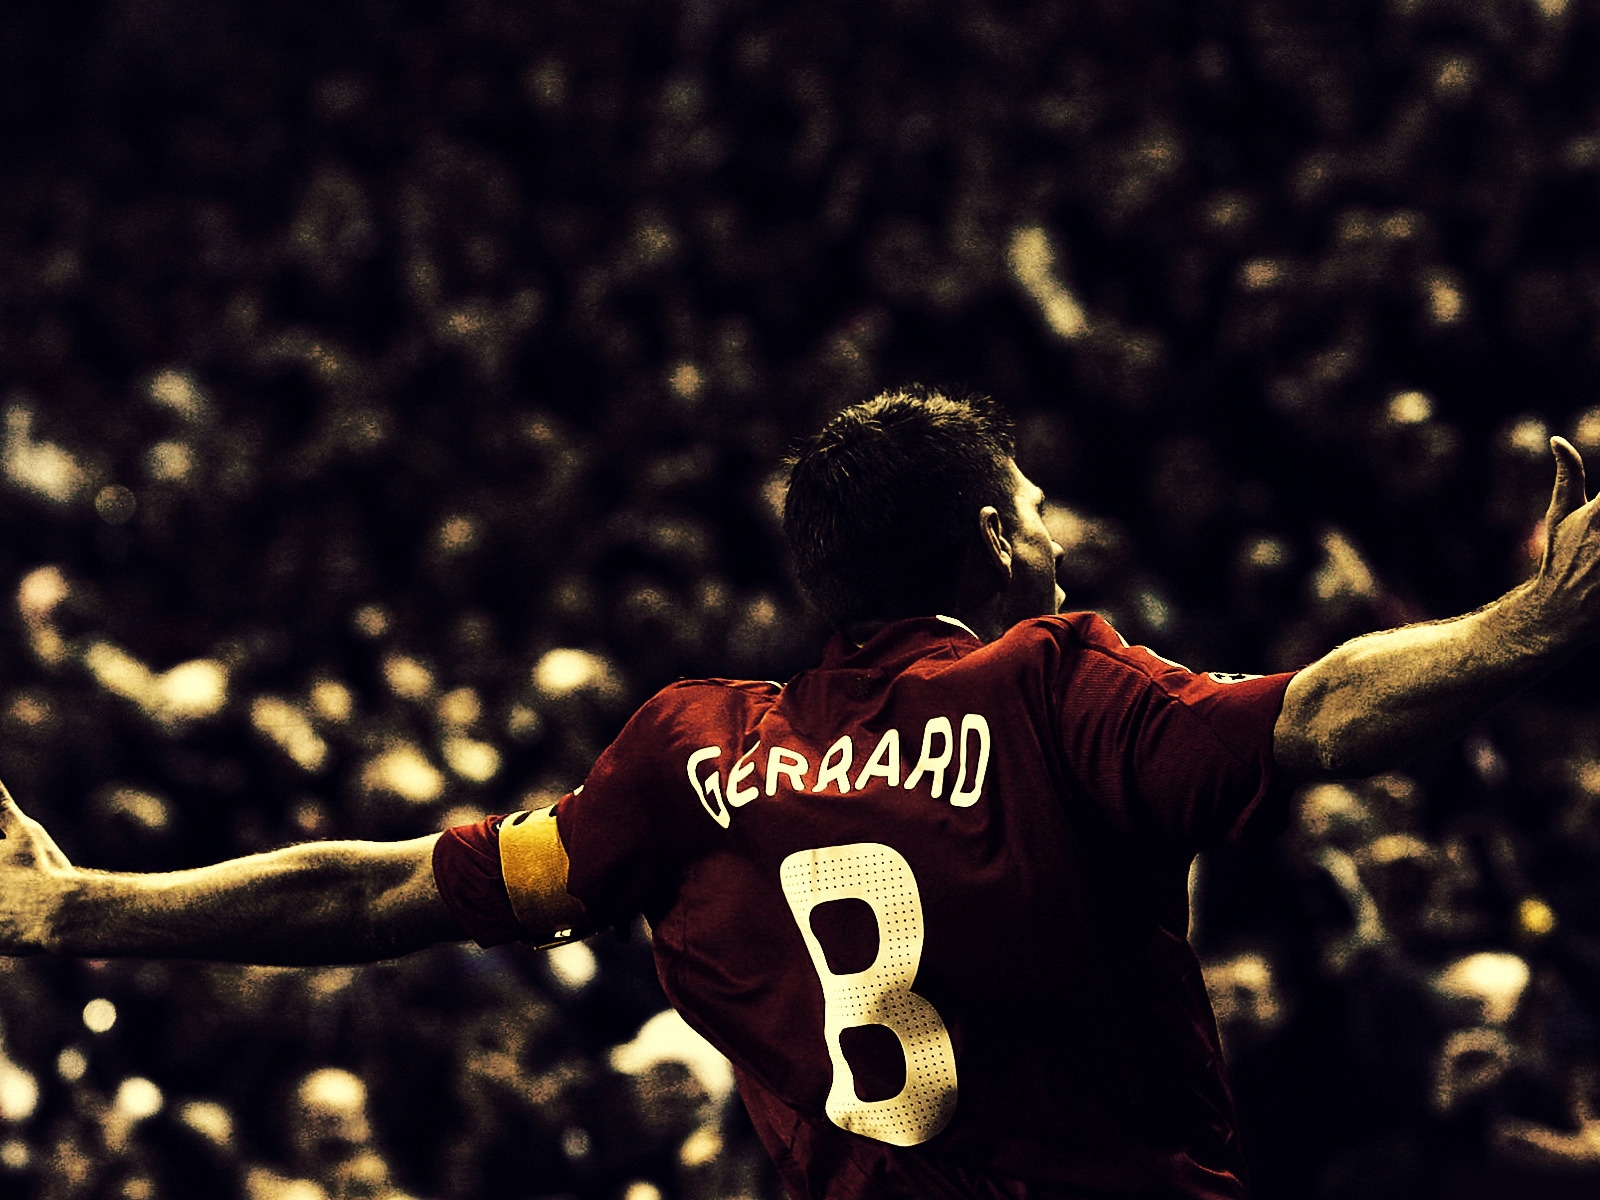 Gerrard Football Player for 1600 x 1200 resolution